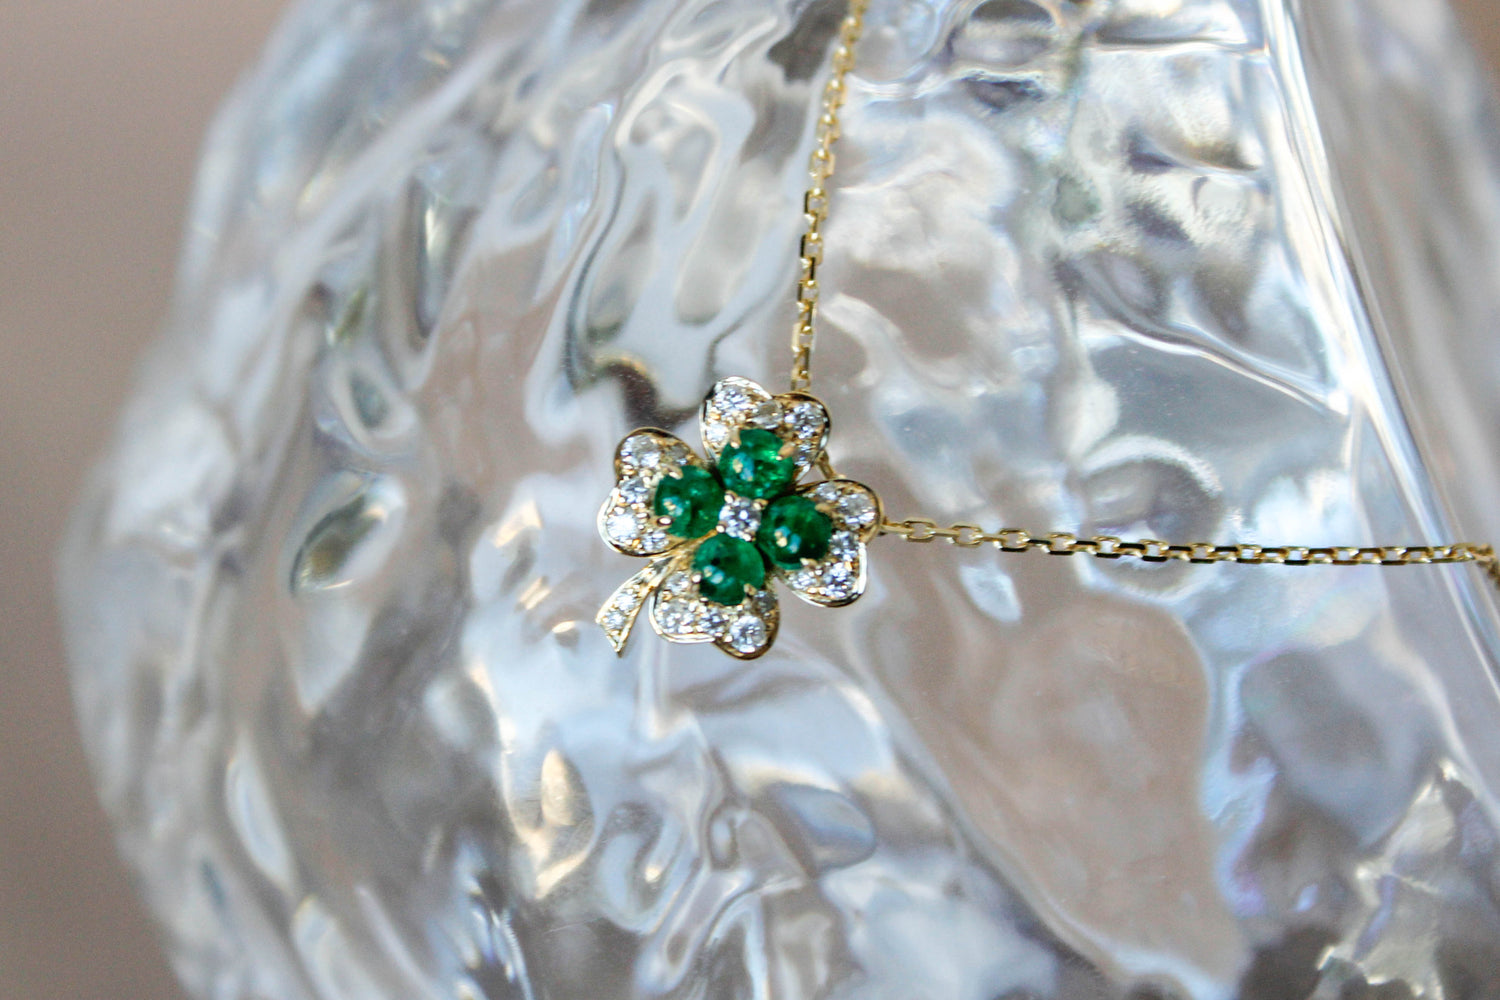 emerlad clover flower necklace 14k gold 18k gold necklace, natural insipred jewelry